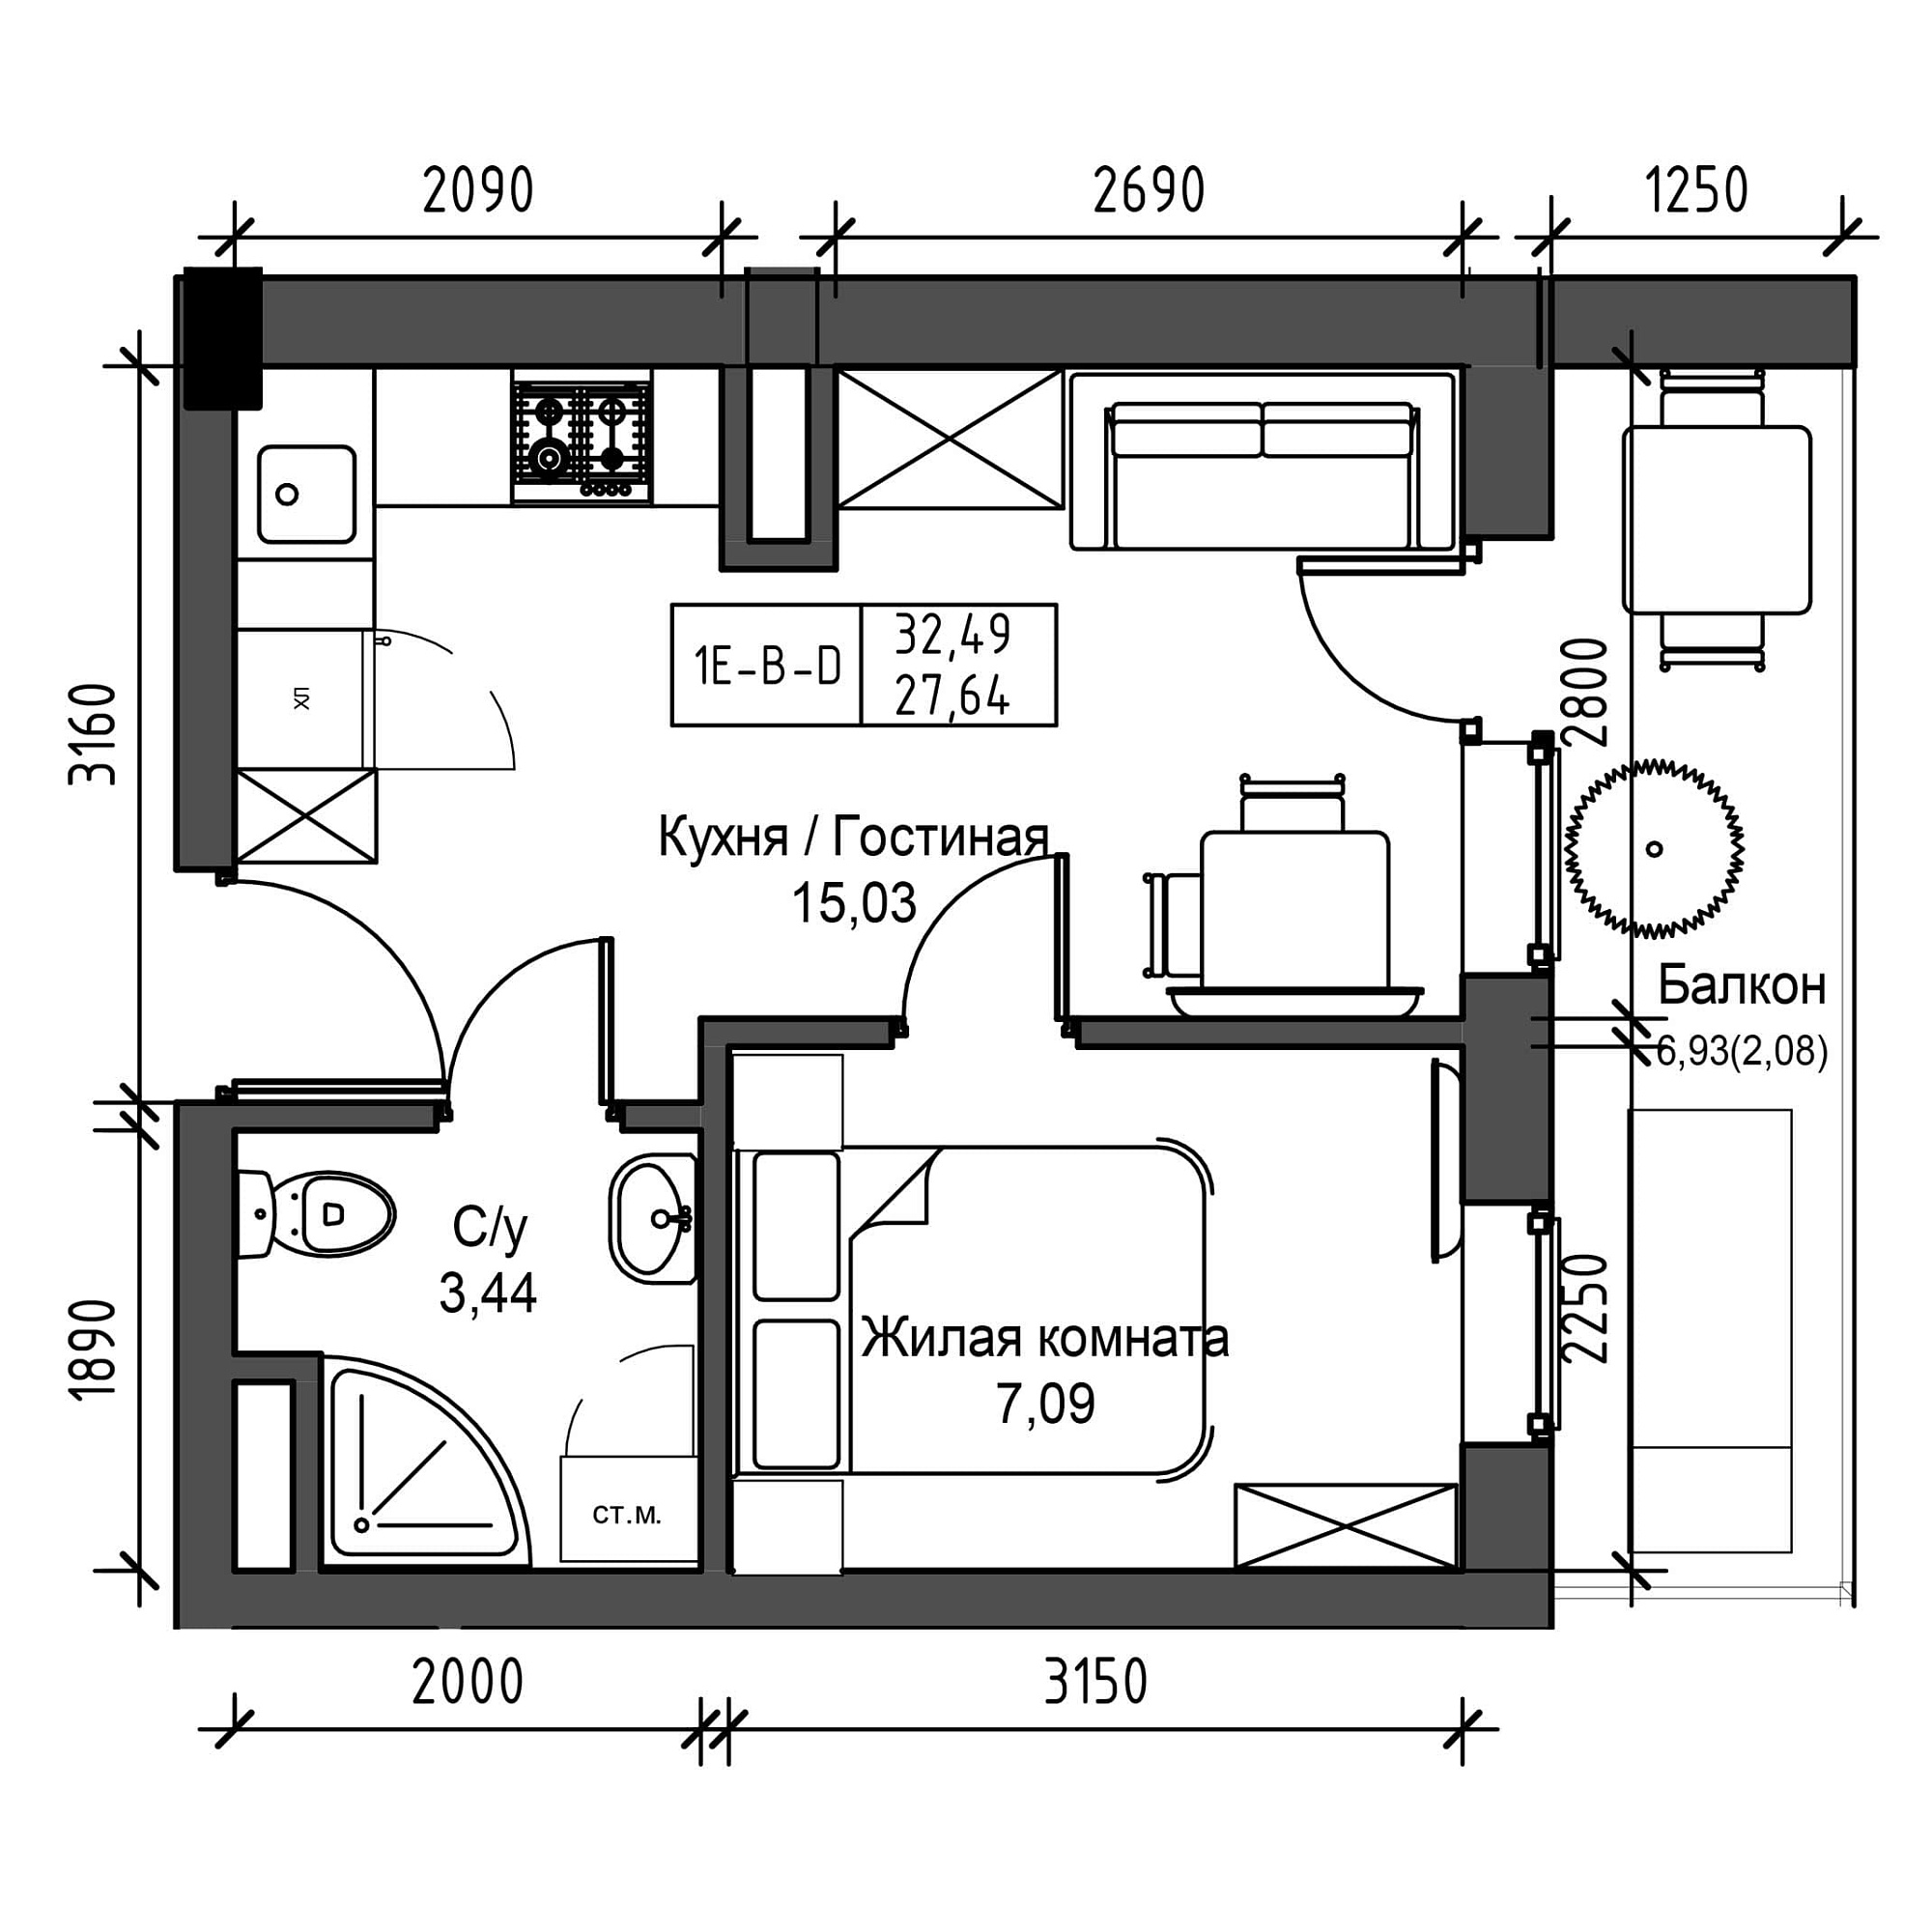 Planning 1-rm flats area 27.64m2, UM-001-05/0001.